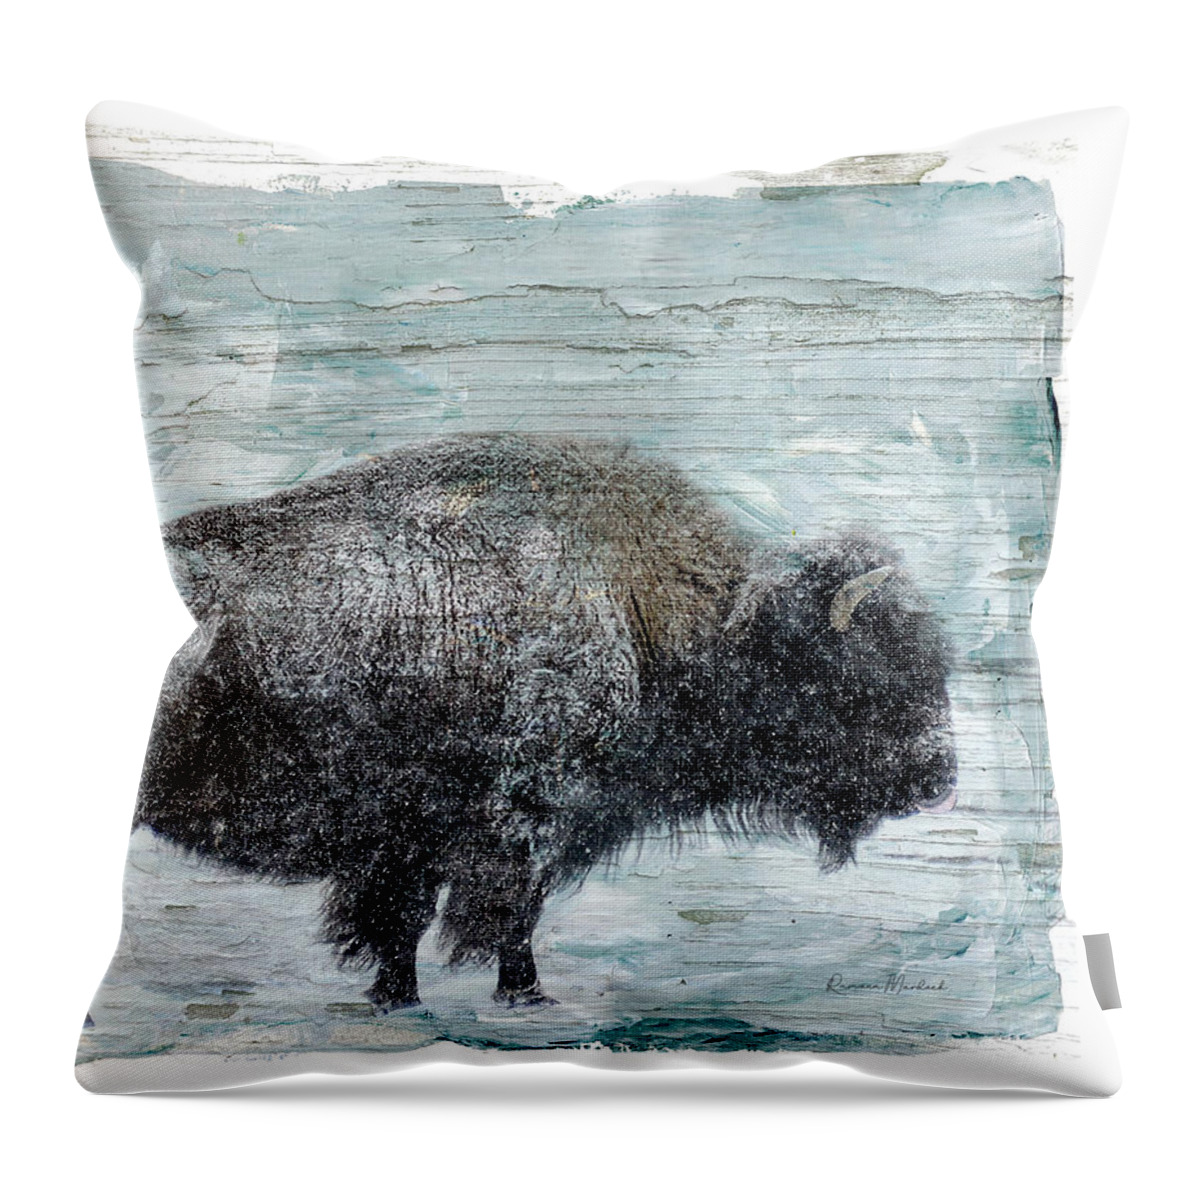 Abstract Throw Pillow featuring the digital art Winter Buffalo #2 by Ramona Murdock